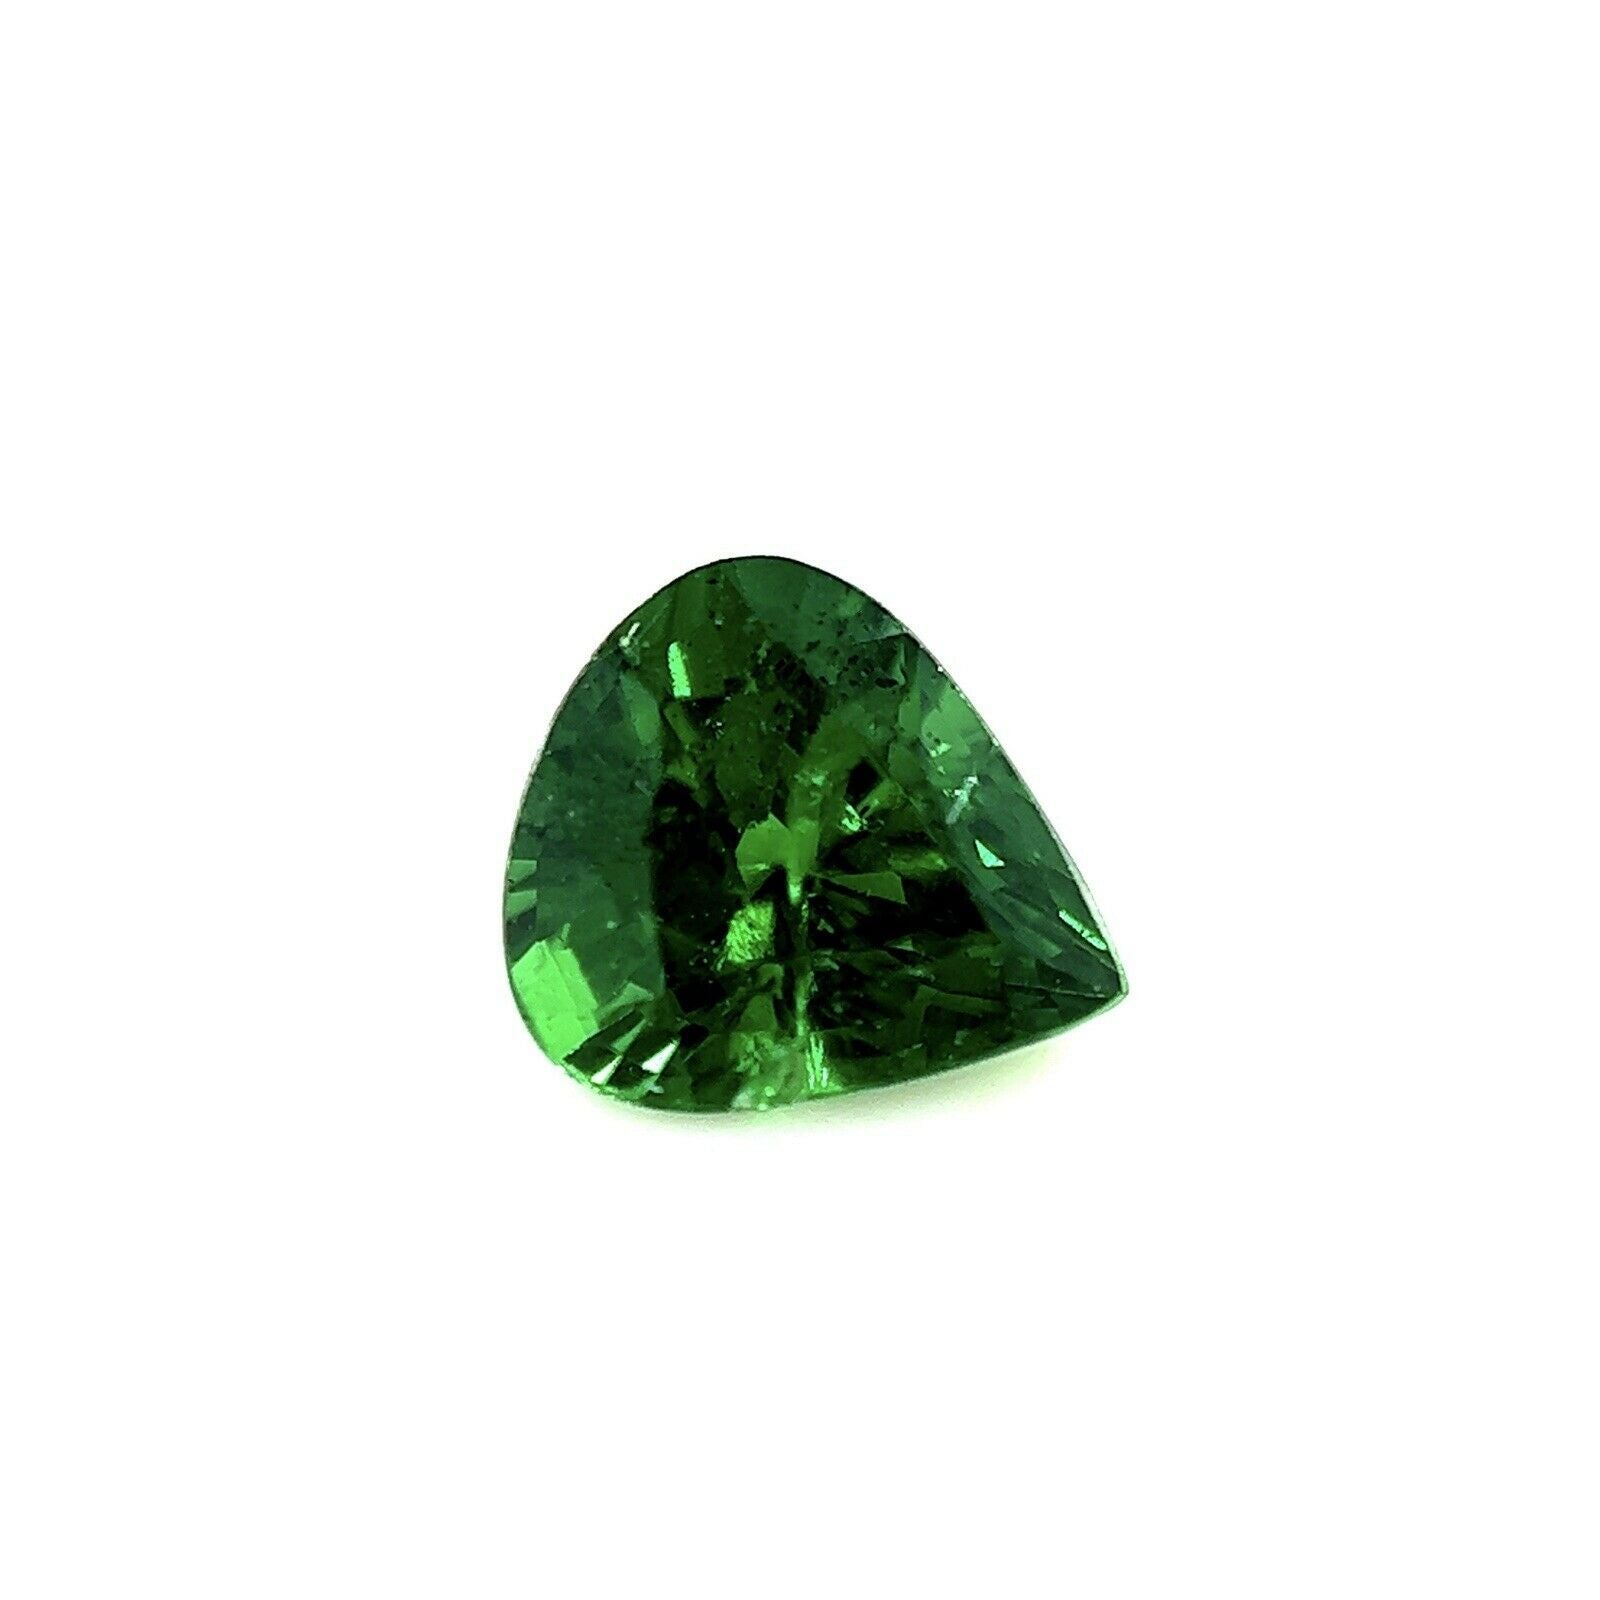 Fine Color Vivid Green Tsavorite Garnet 0.83ct Pear Teardrop Cut Gem For Sale